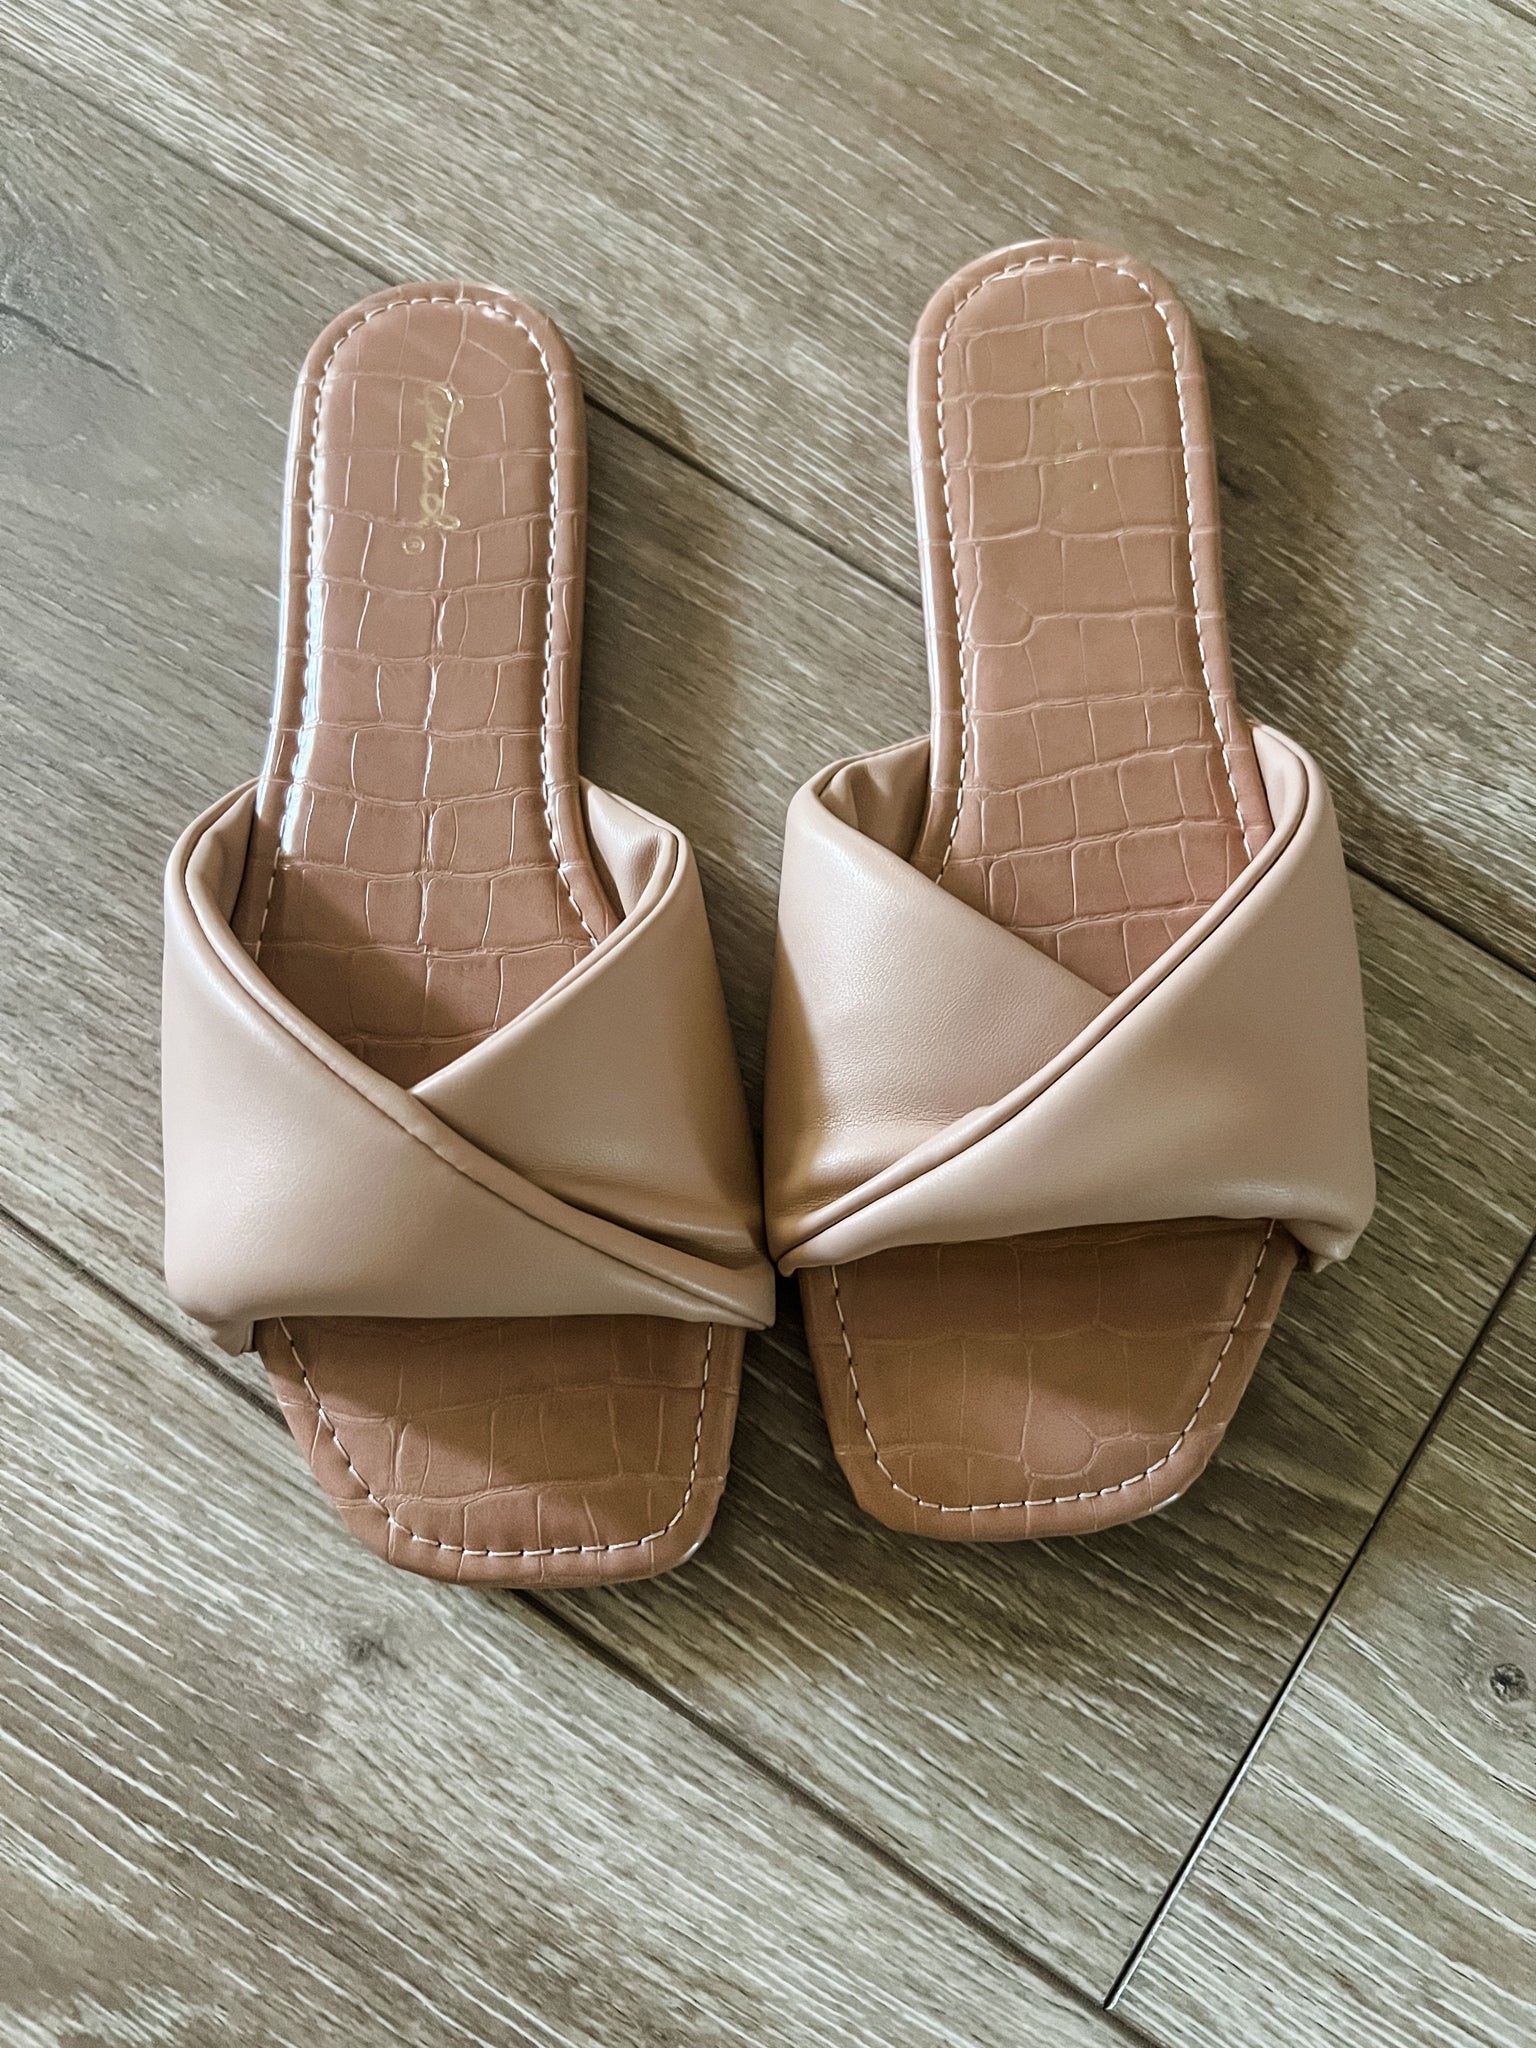 The Blush Flat Sandals